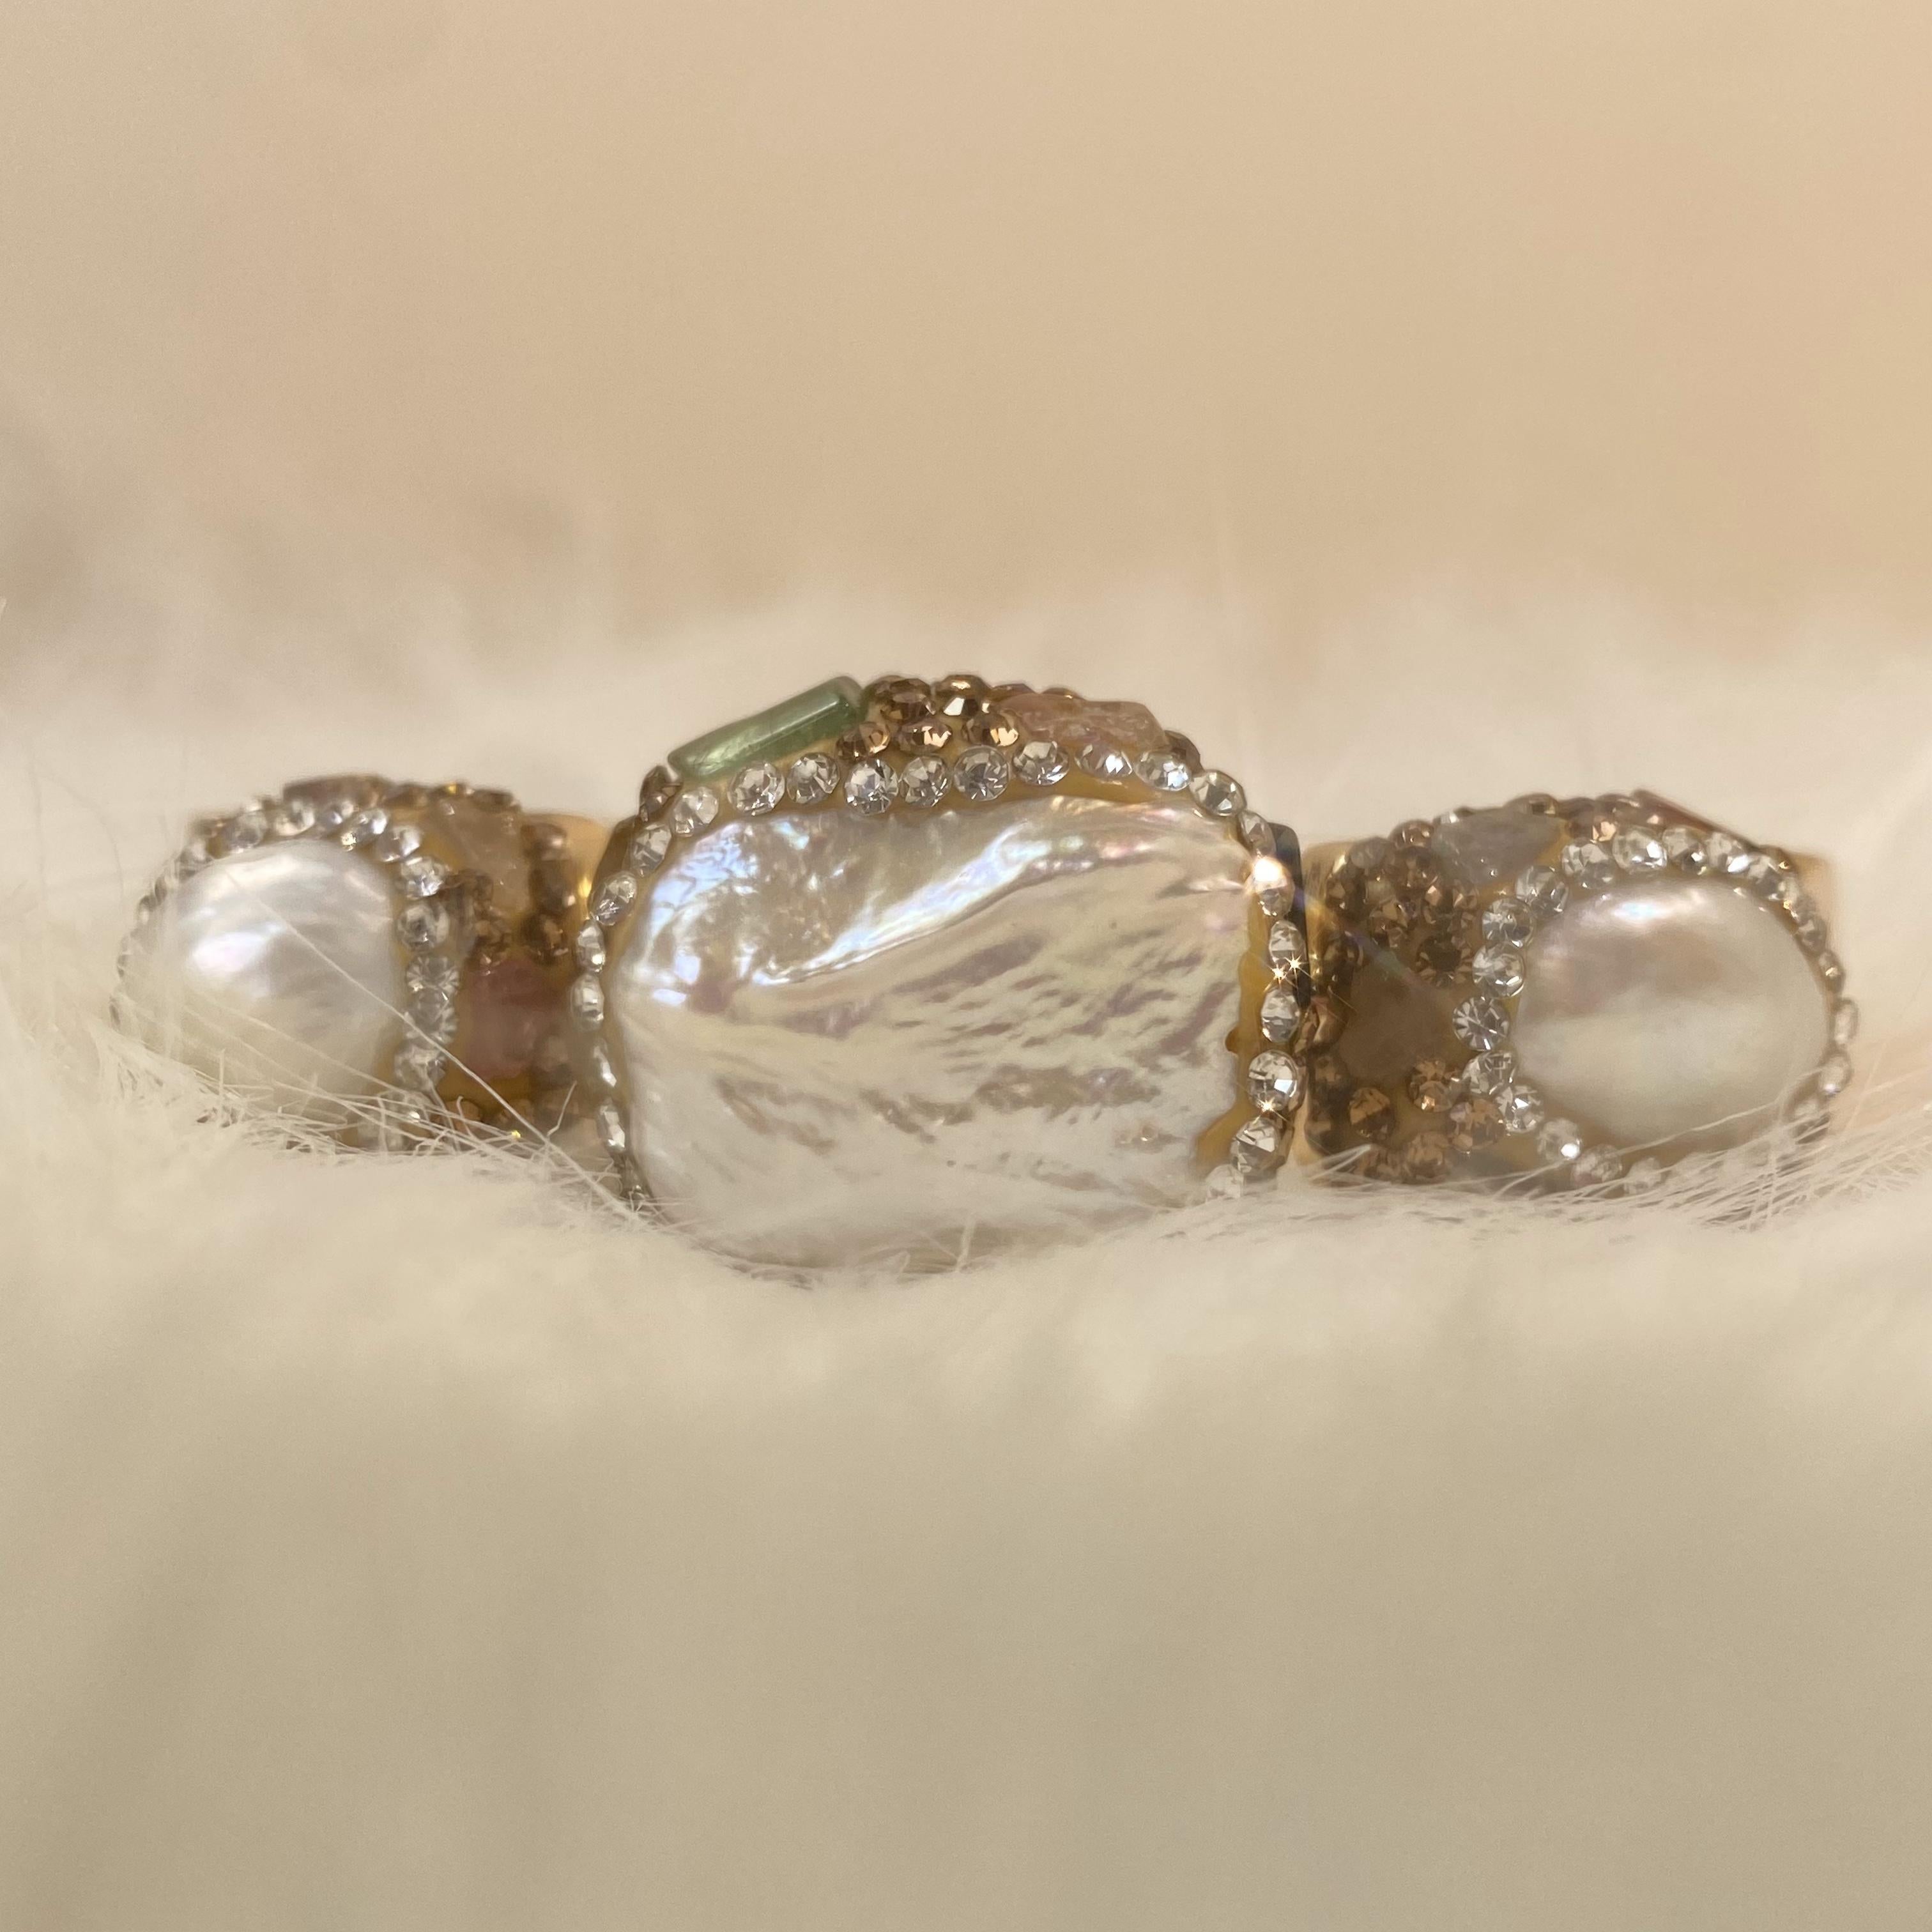 Elegant White Jewelry Set